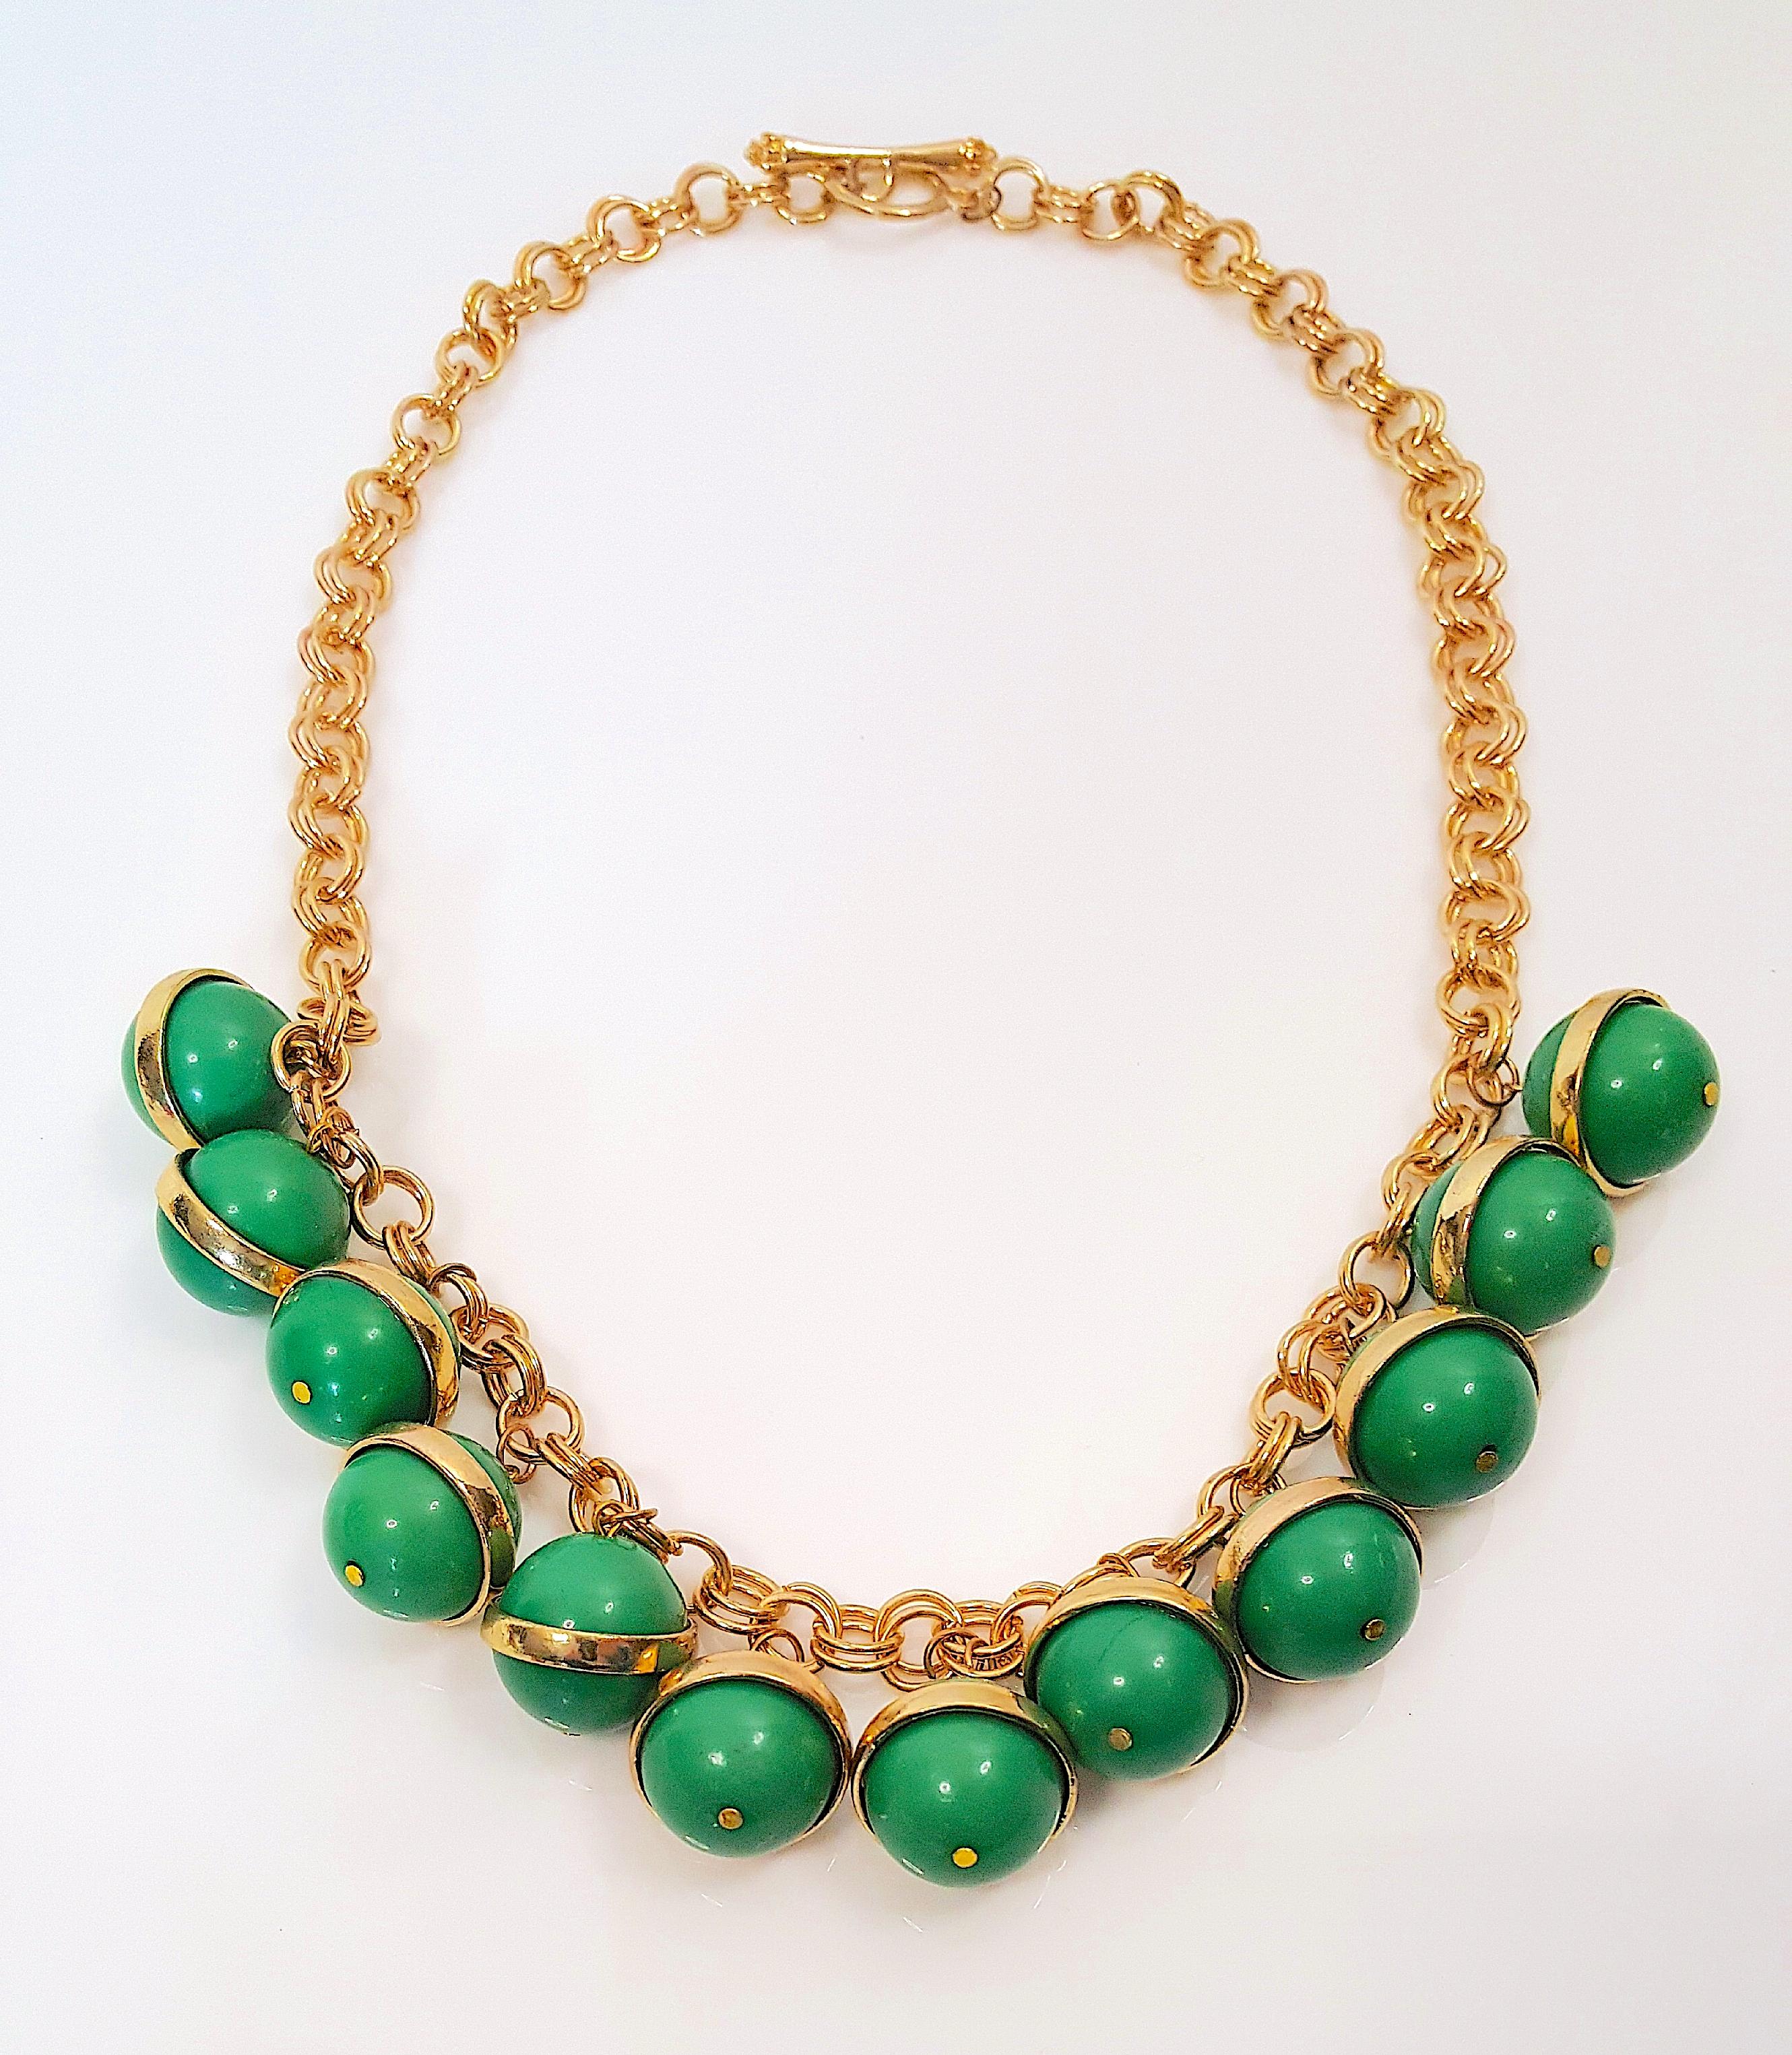 Bakelite 1930s German ArtDeco GoldRinged EmeraldBallPendants ChainLink Necklace For Sale 3